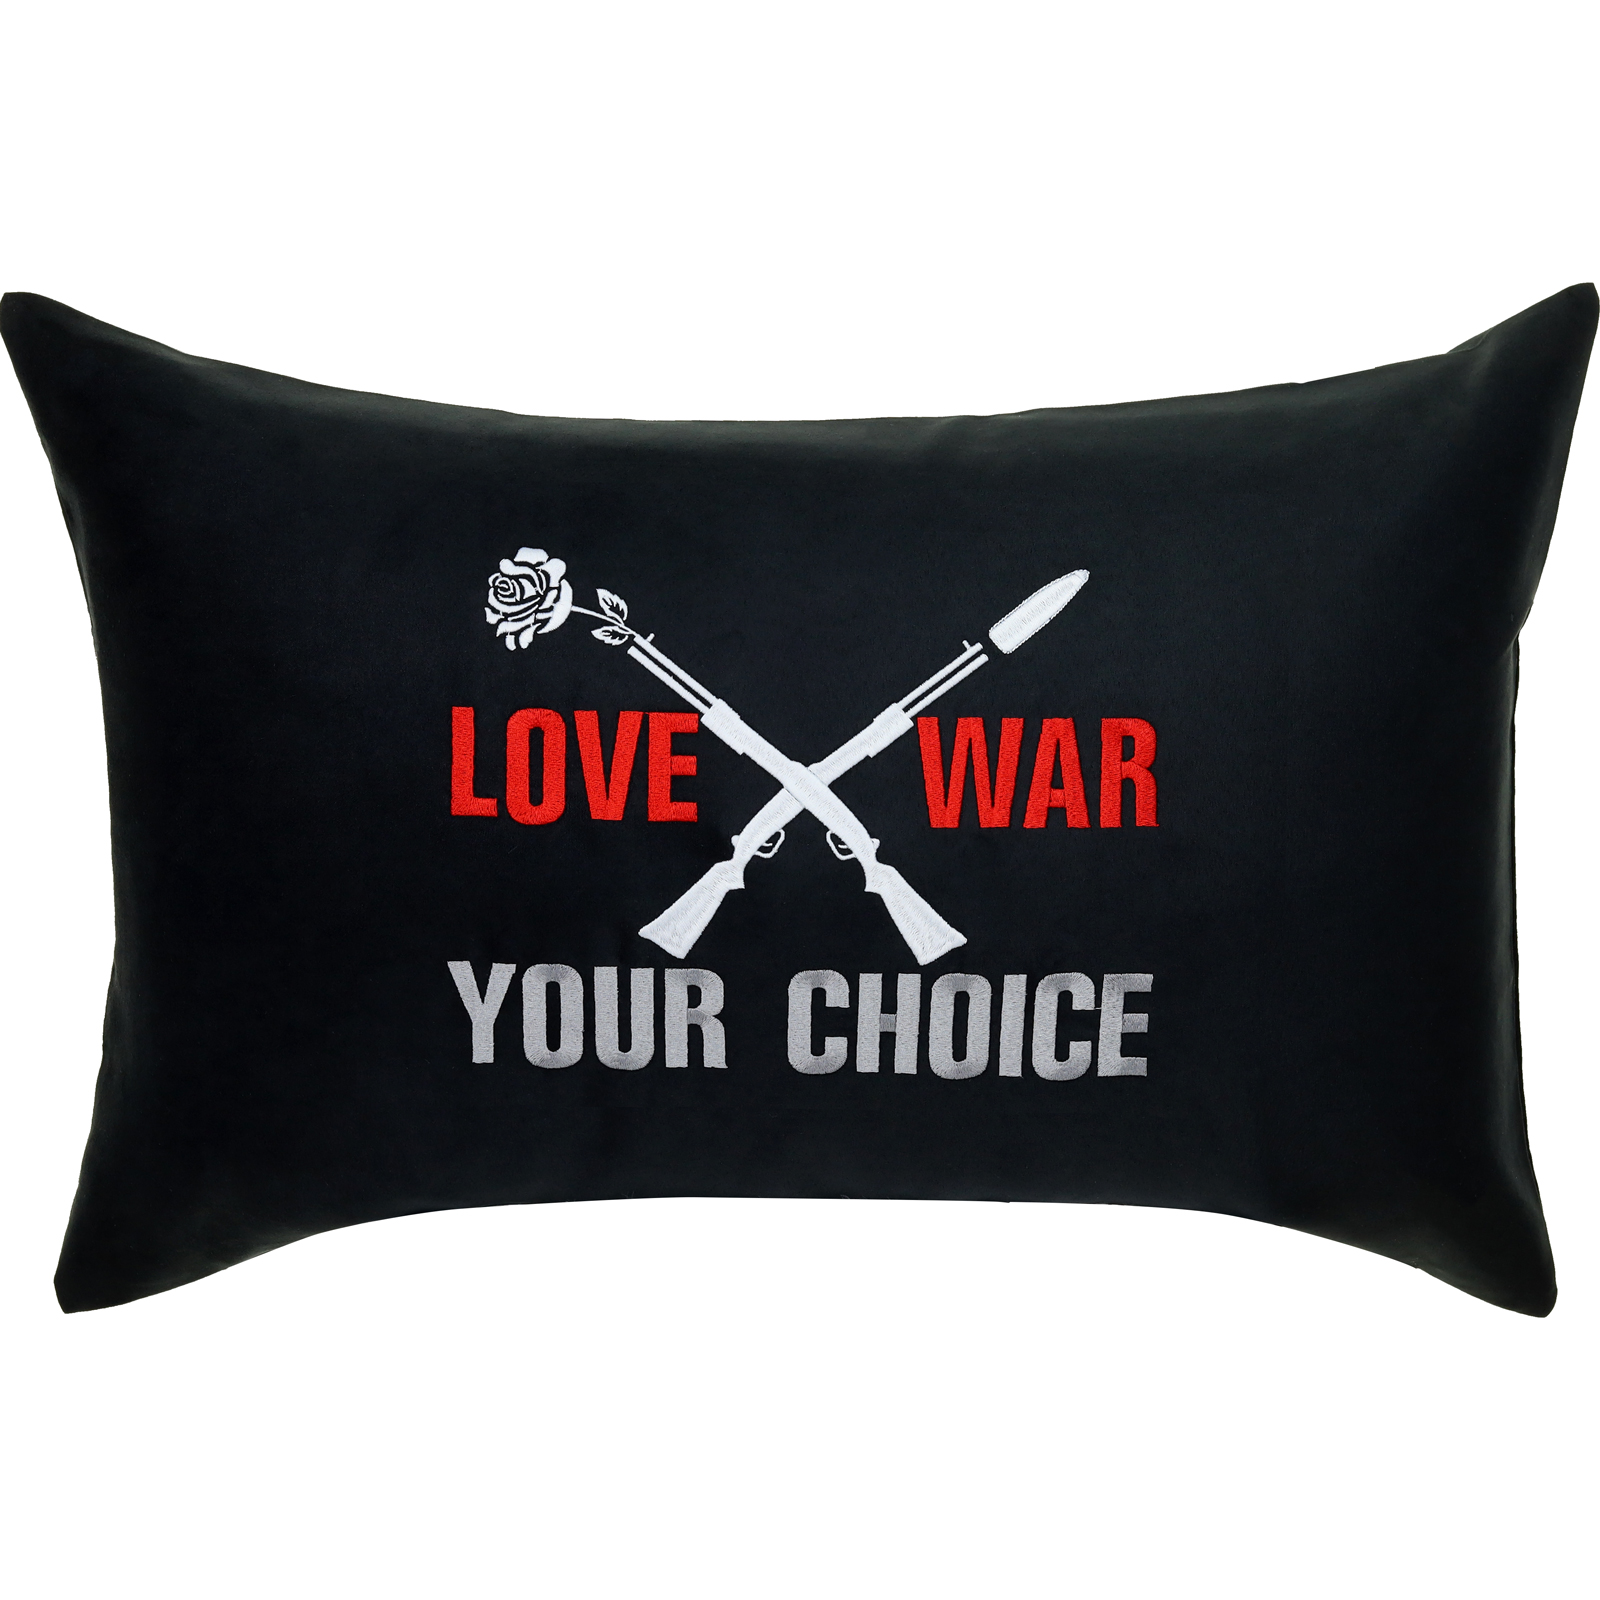 Love or war - Your choice - Kissen